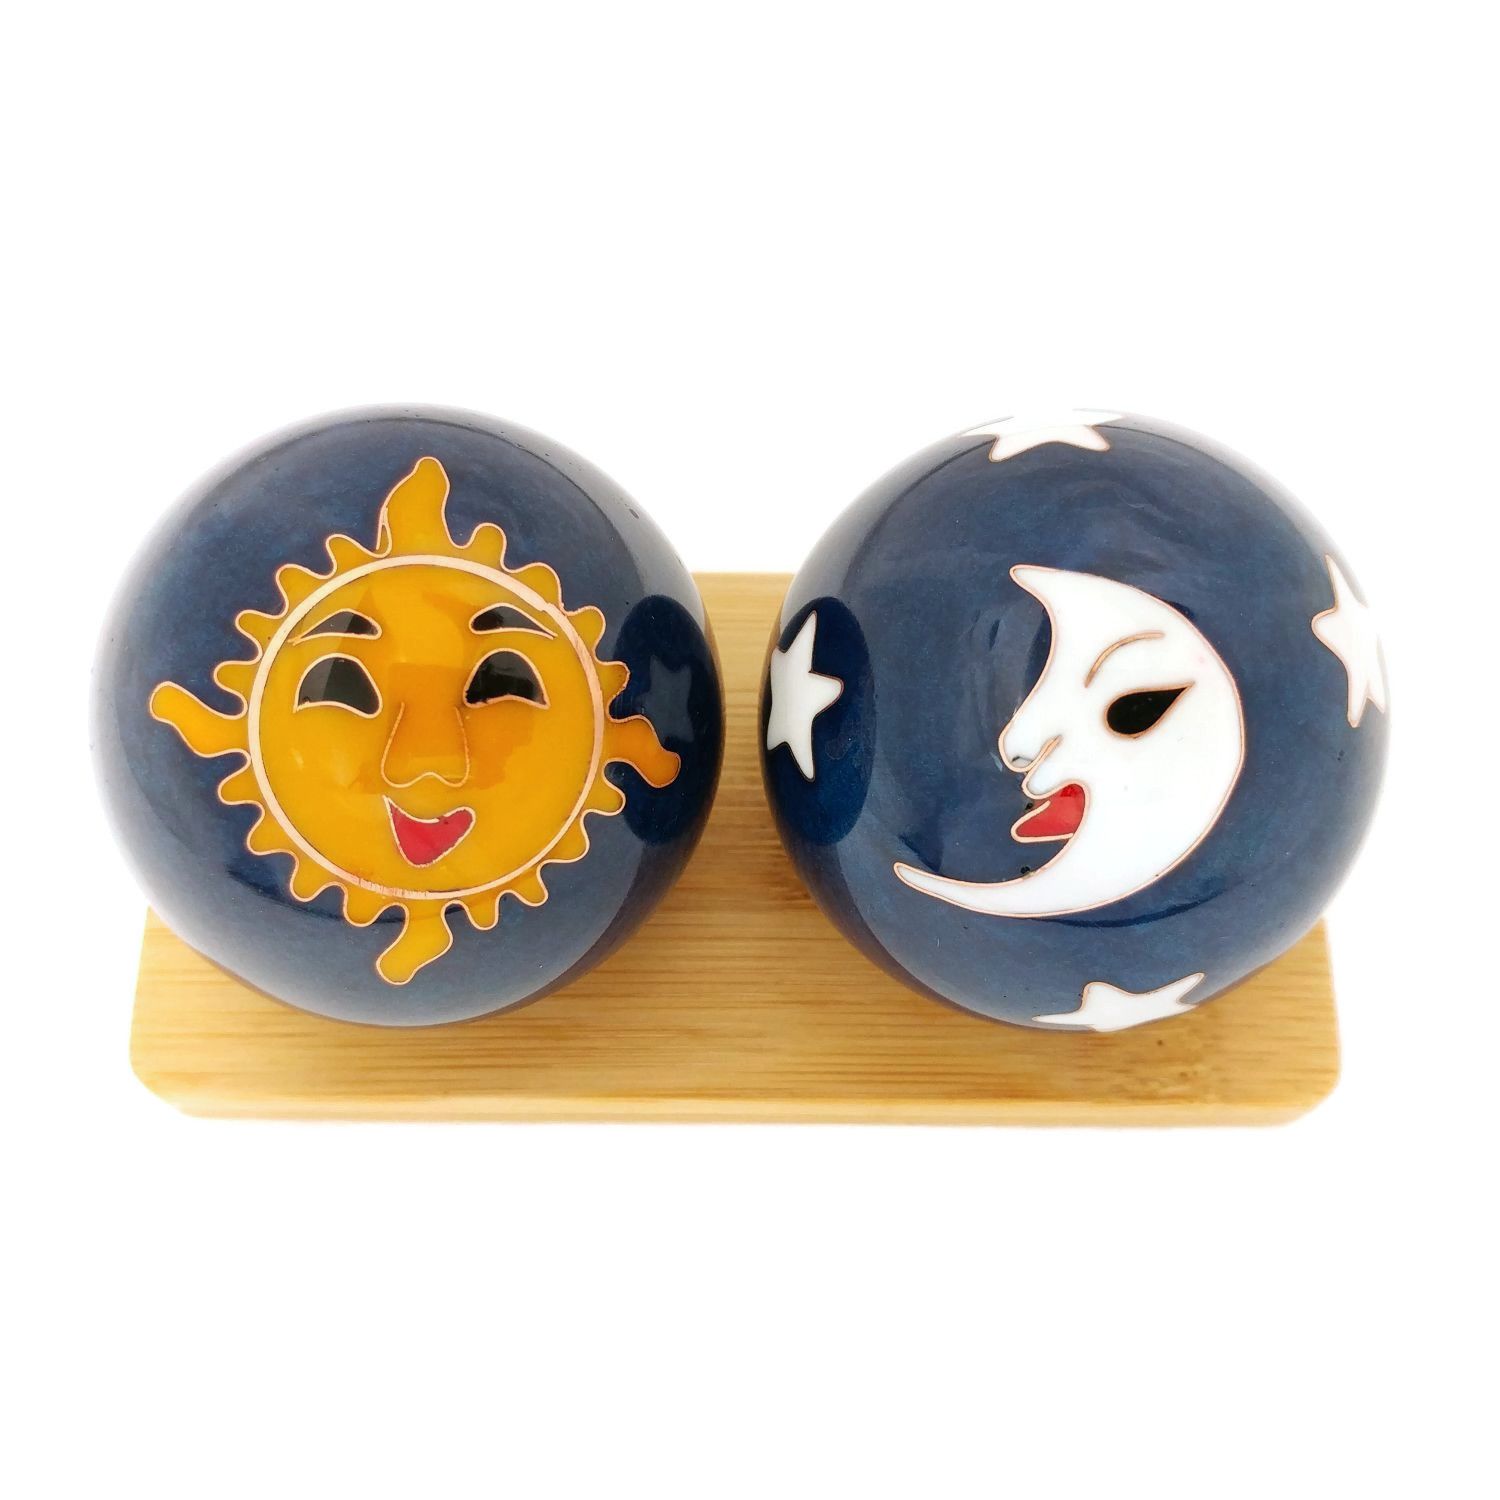 Шары баодинг на деревянной подставке. Шары баодинг солнце и Луна. Sun balls. Baoding balls.